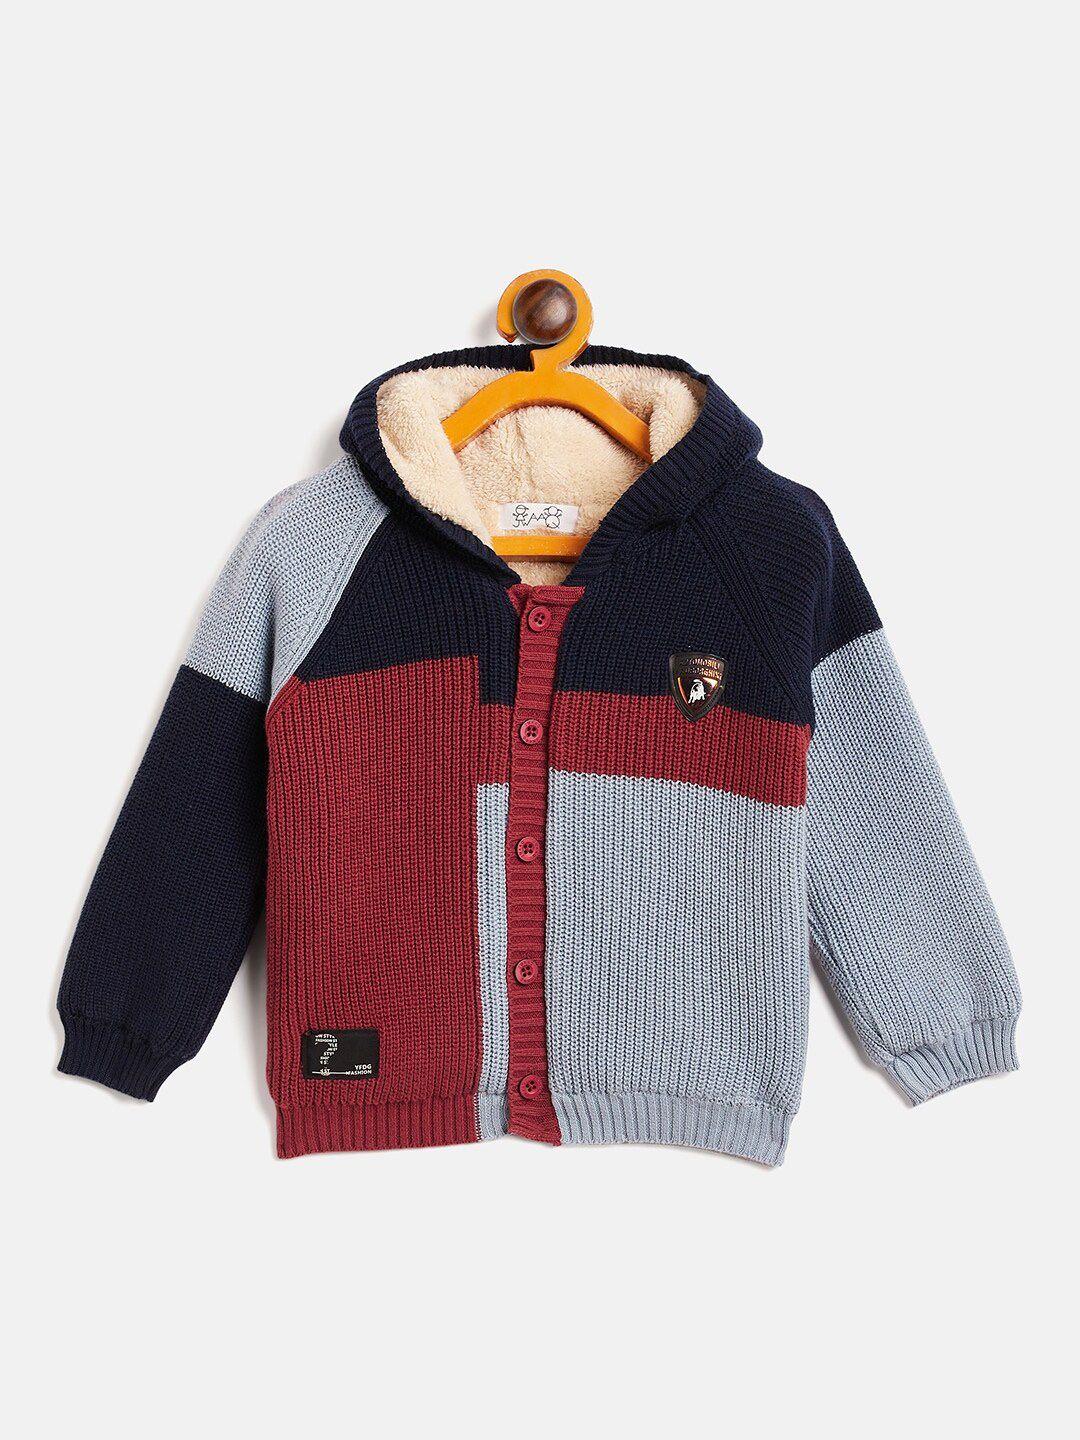 jwaaq-unisex-kids-colourblocked-pure-cotton-hood-cardigan-sweater